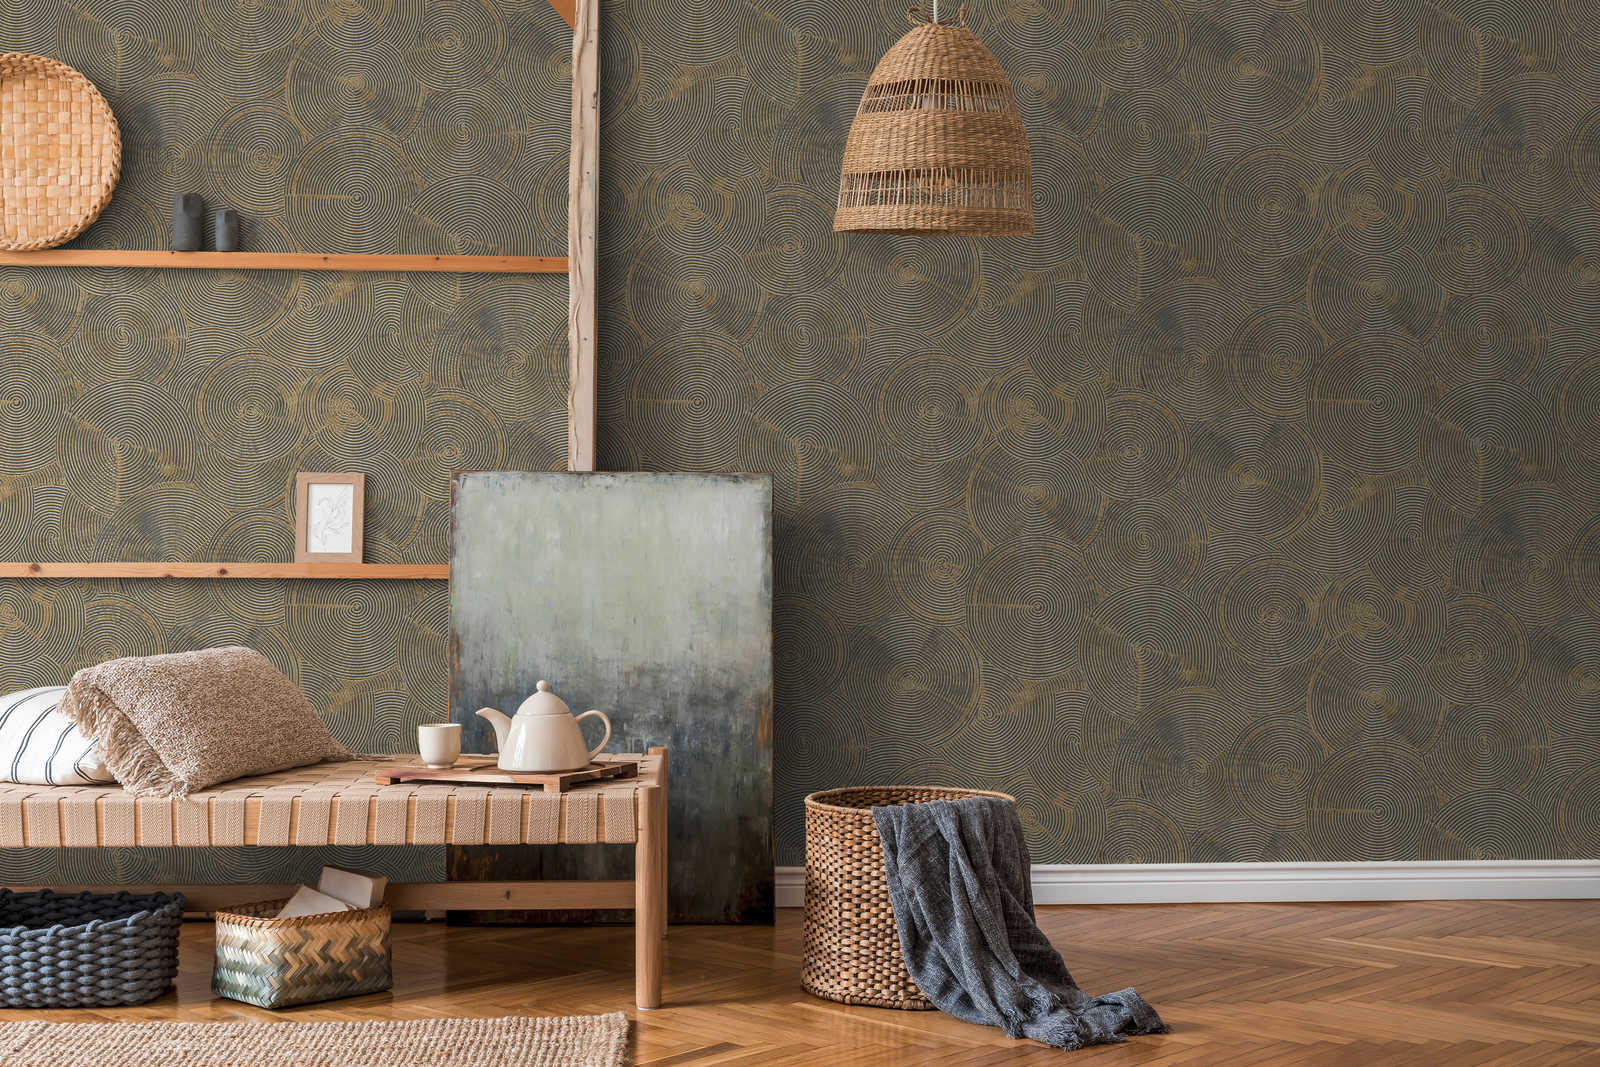             Pattern wallpaper modern plaster look with gold - beige, metallic, black
        